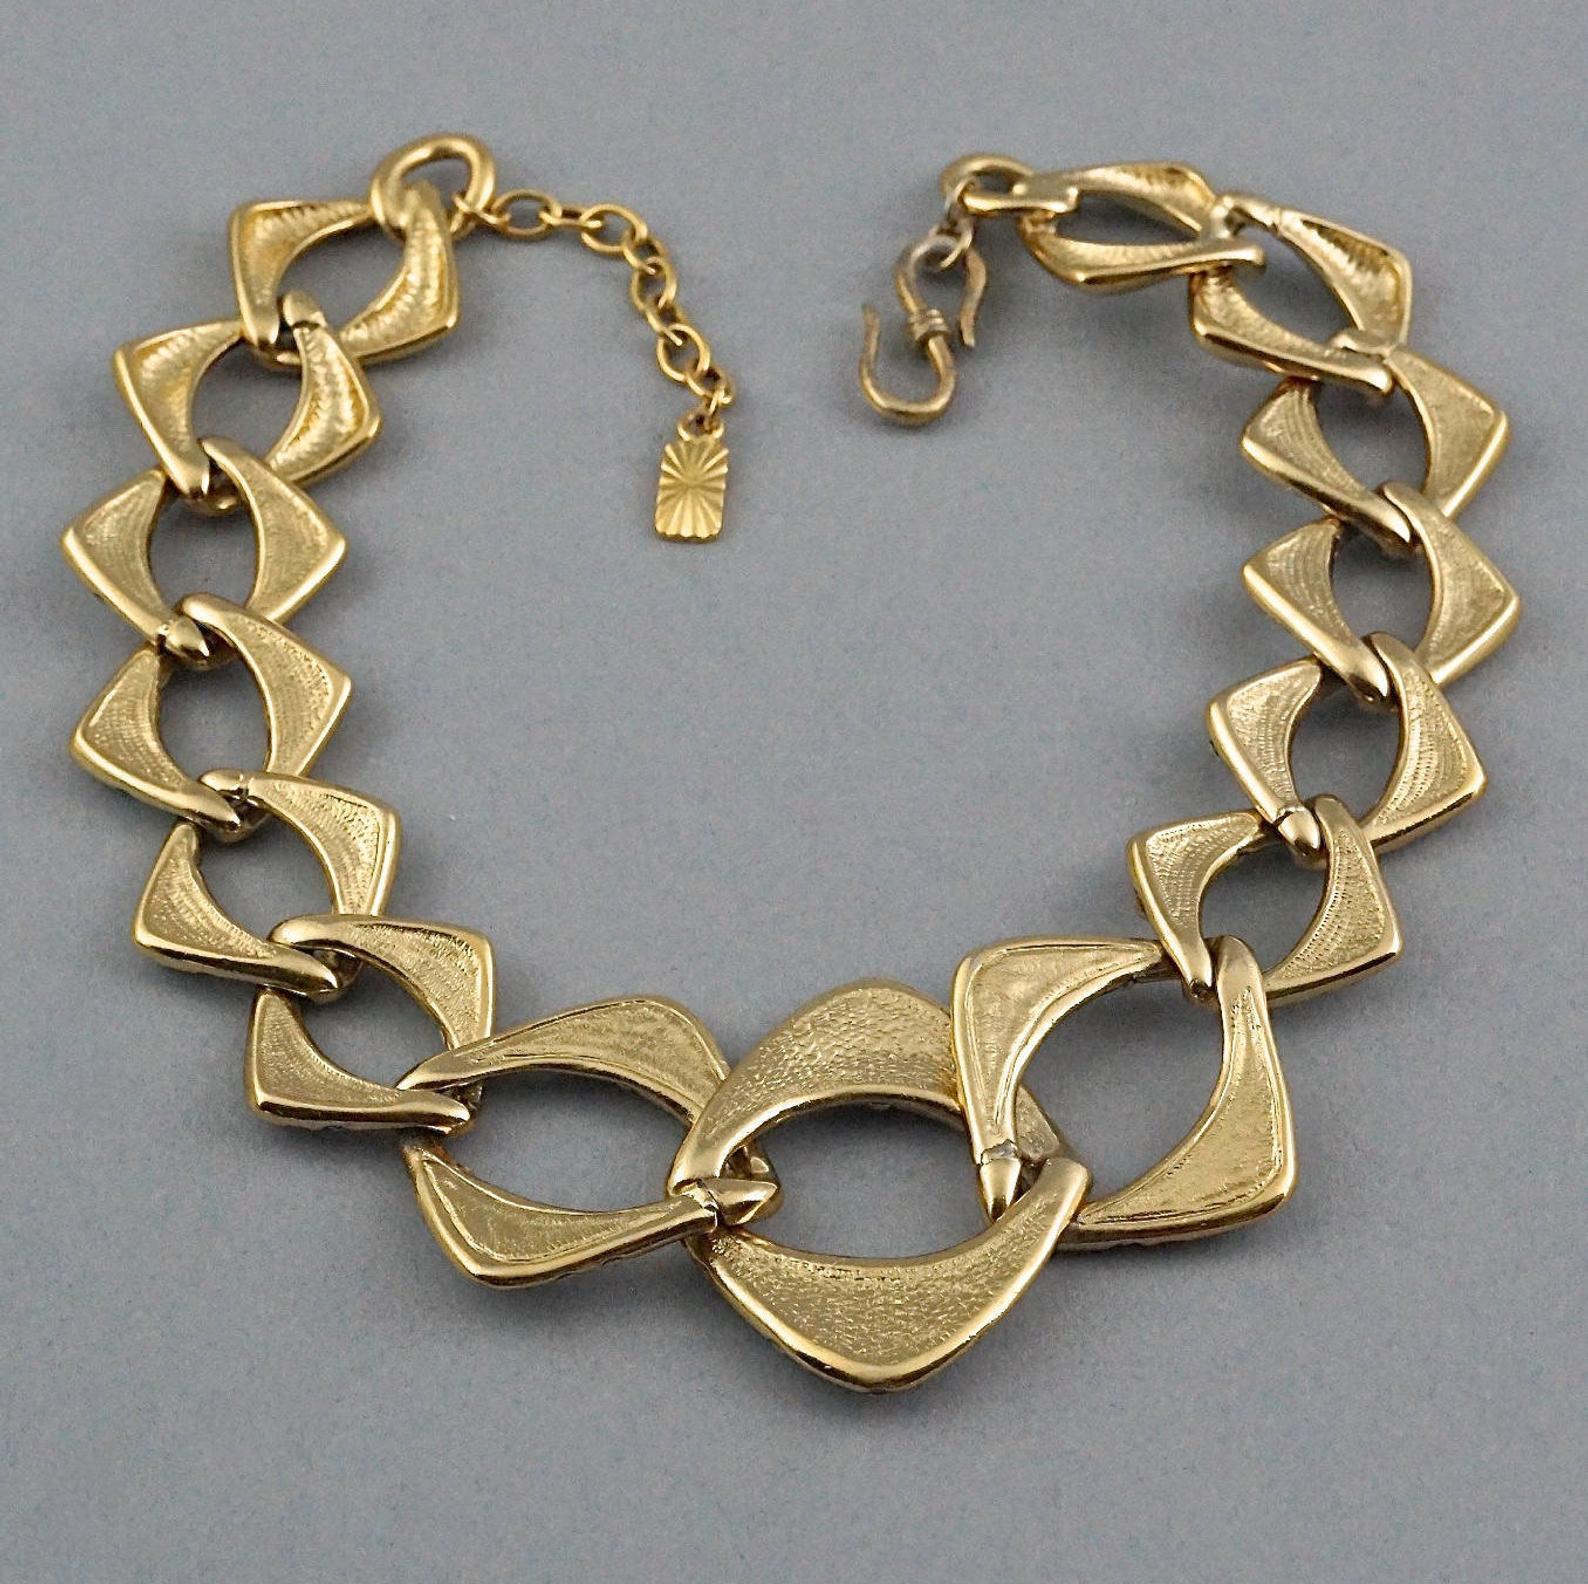 YVES SAINT LAURENT Ysl by Robert Goossens Rhinestone Chain Choker Necklace For Sale 1